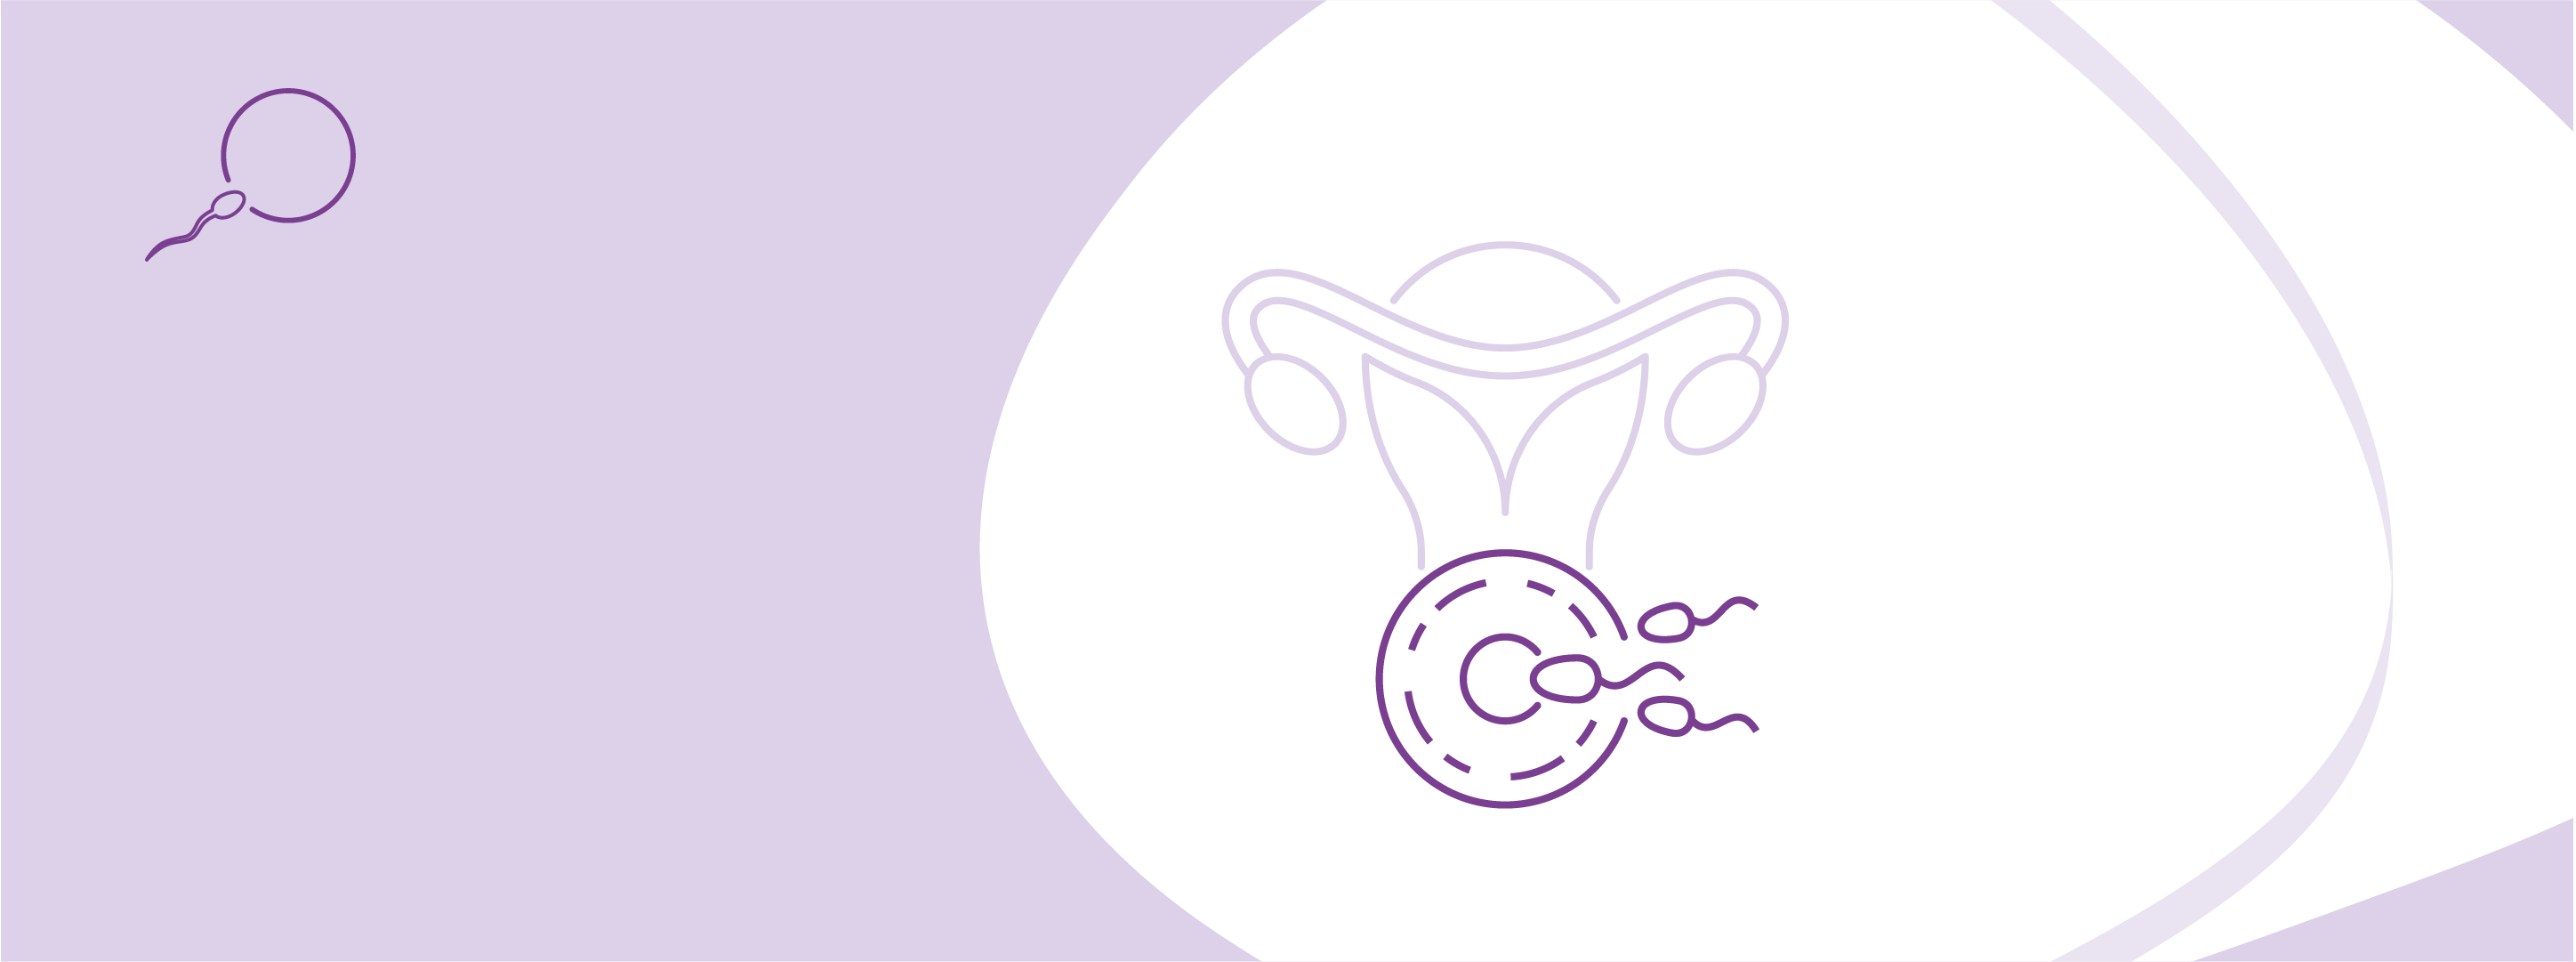 IVF program with drug stimulation and embryo transfer